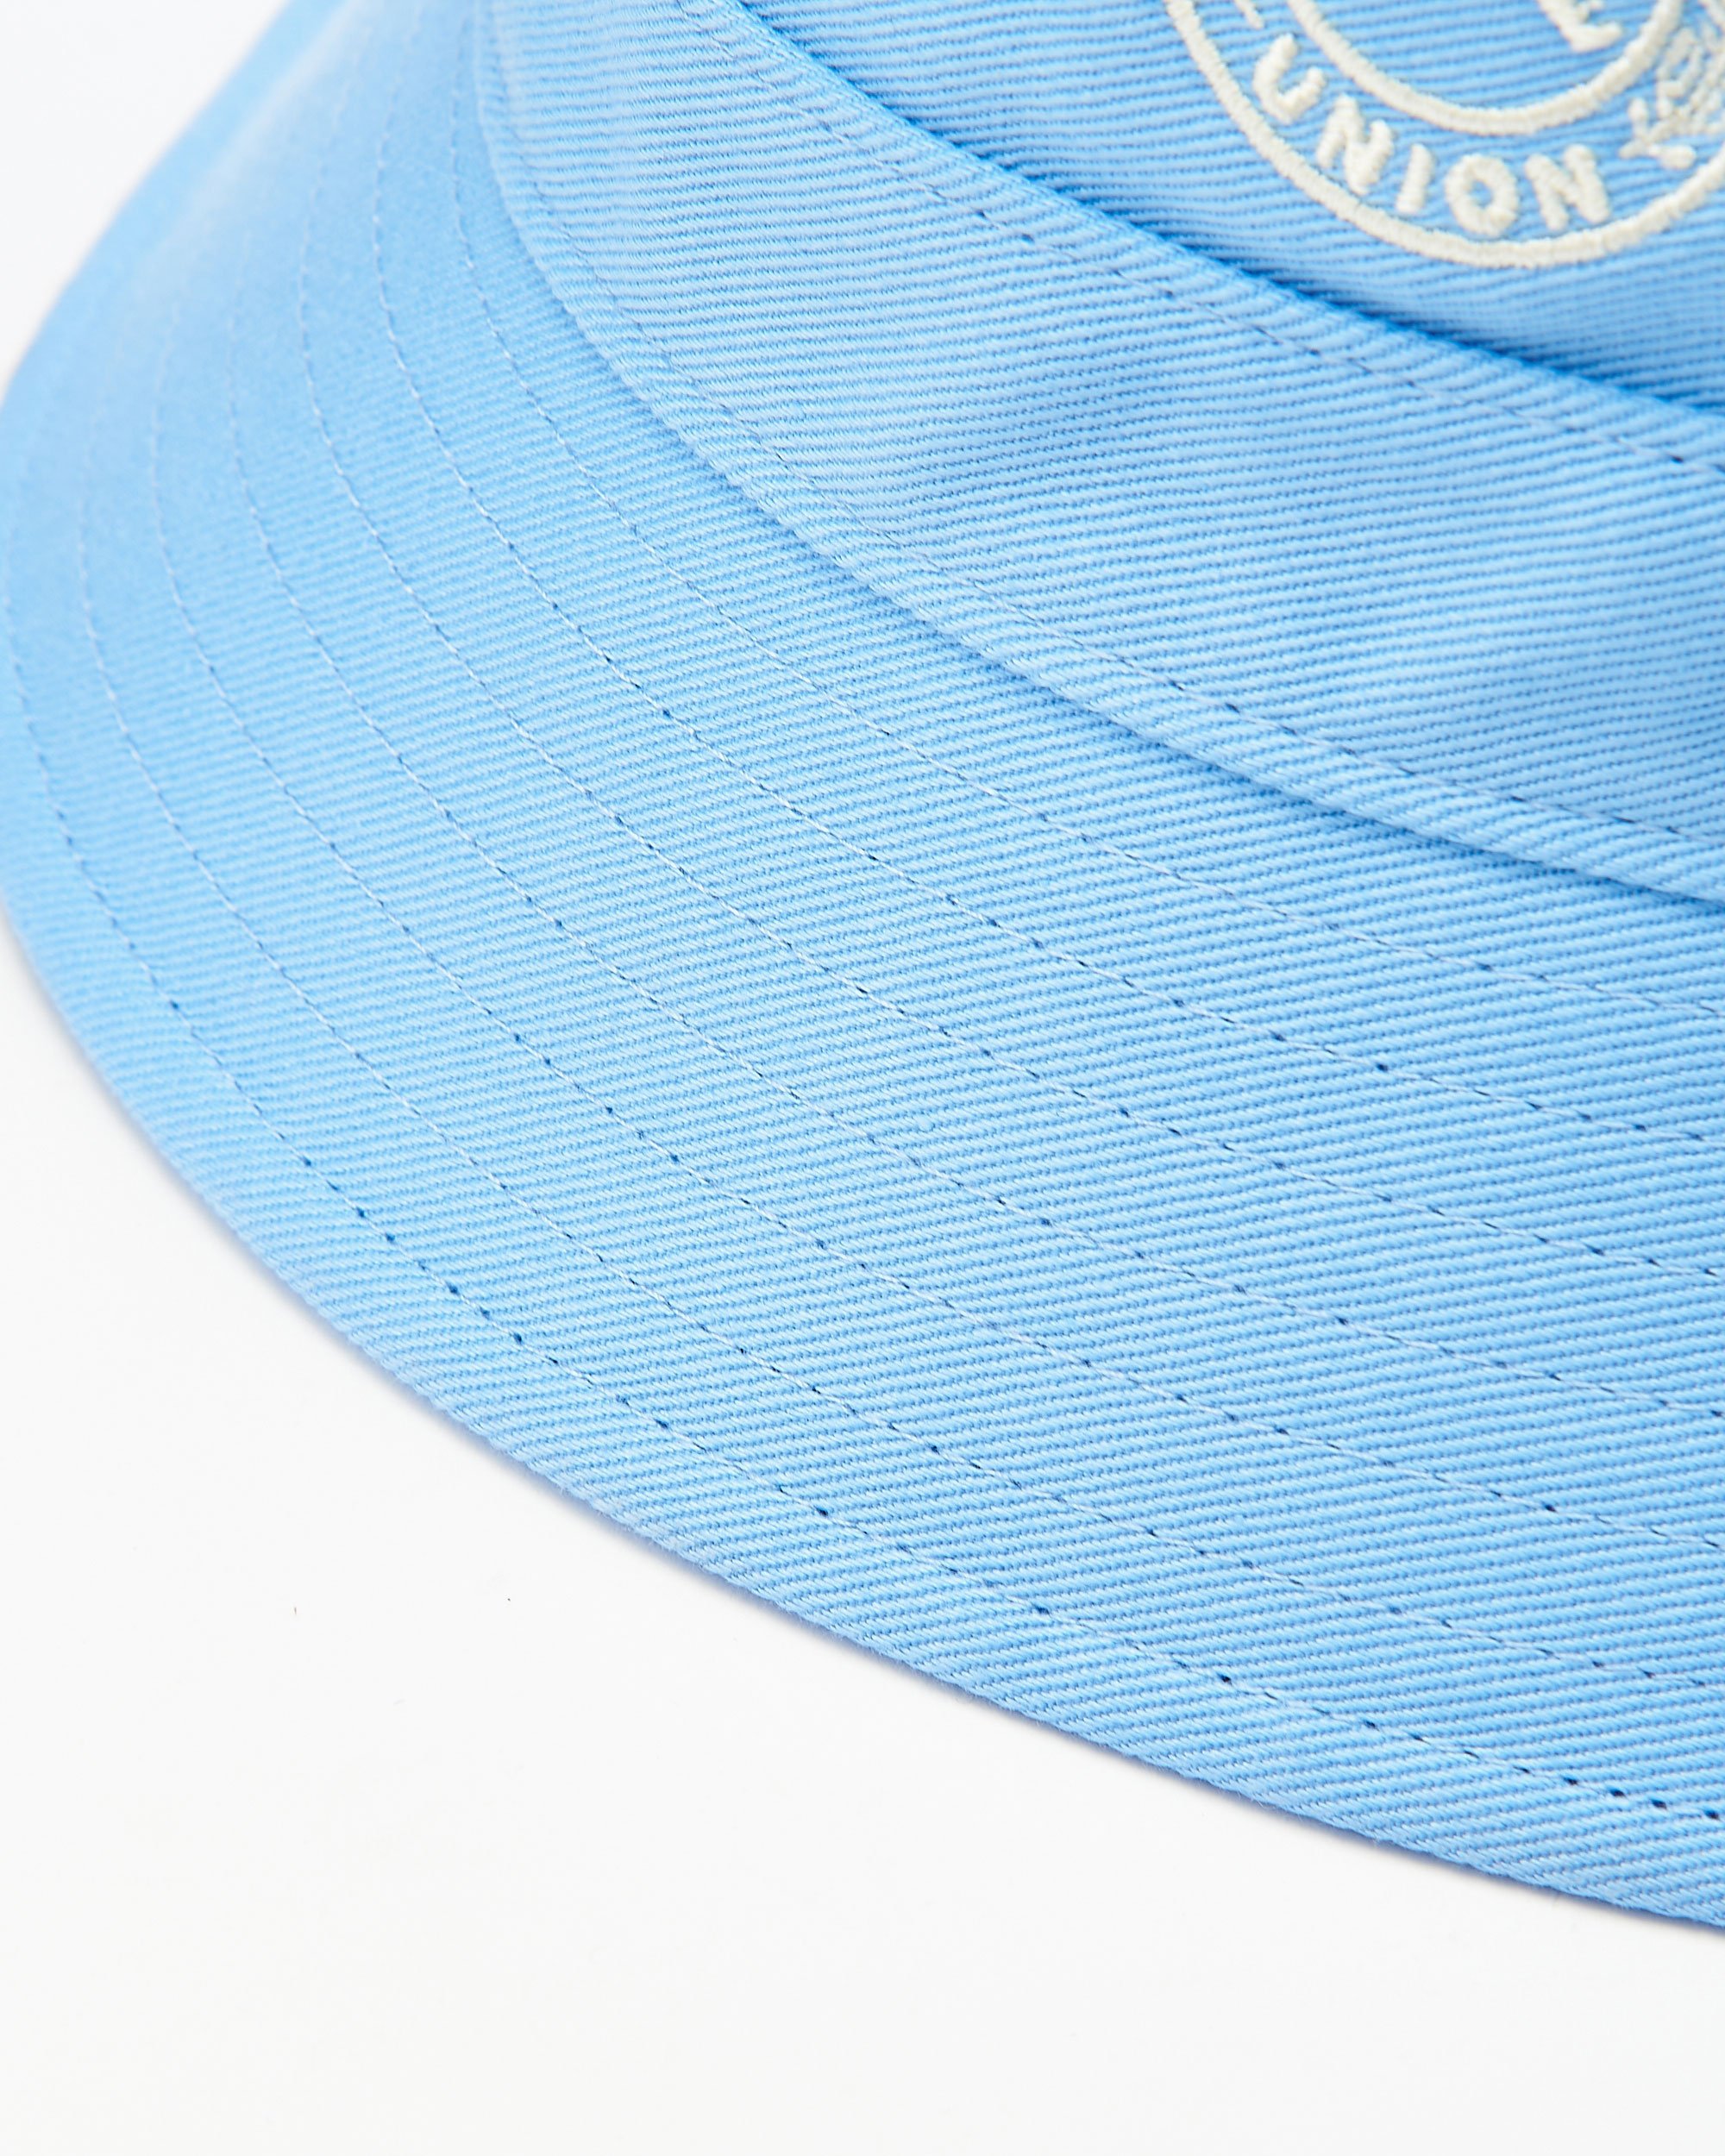 Jordan x UNION Unisex Bucket Hat Bleu DX6483-496| FOOTDISTRICT